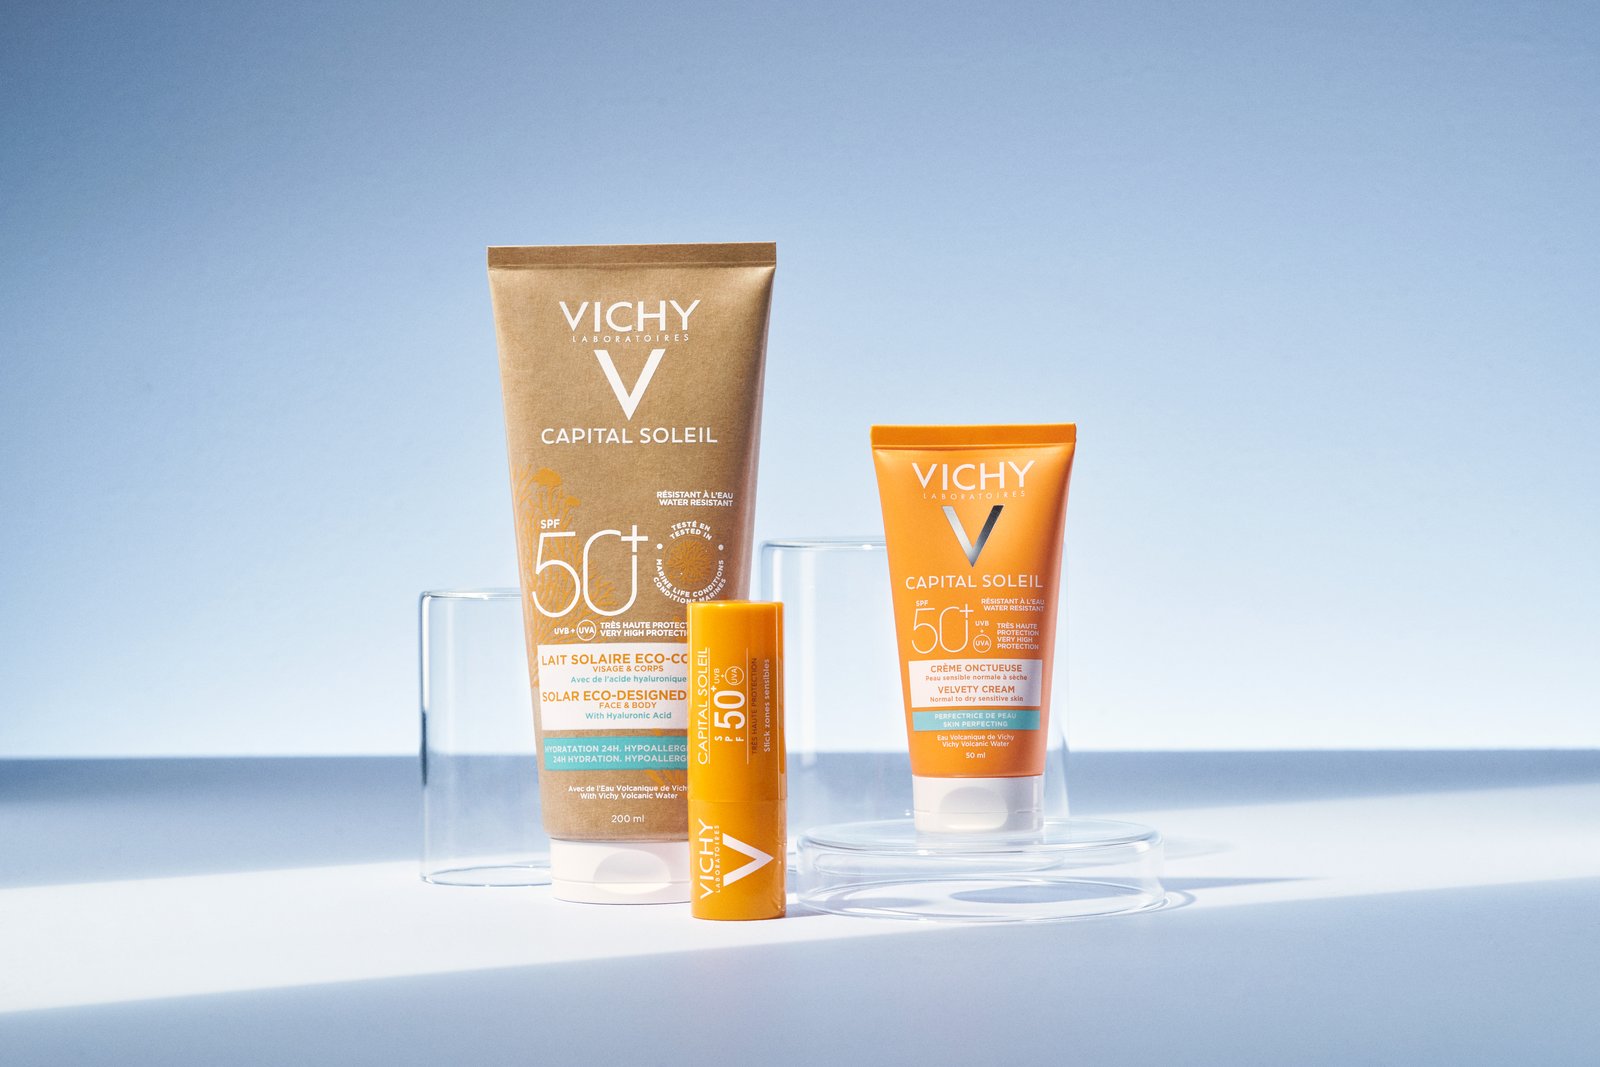 Vichy Capital Soleil SPF50+ Velvety Cream 50 ml